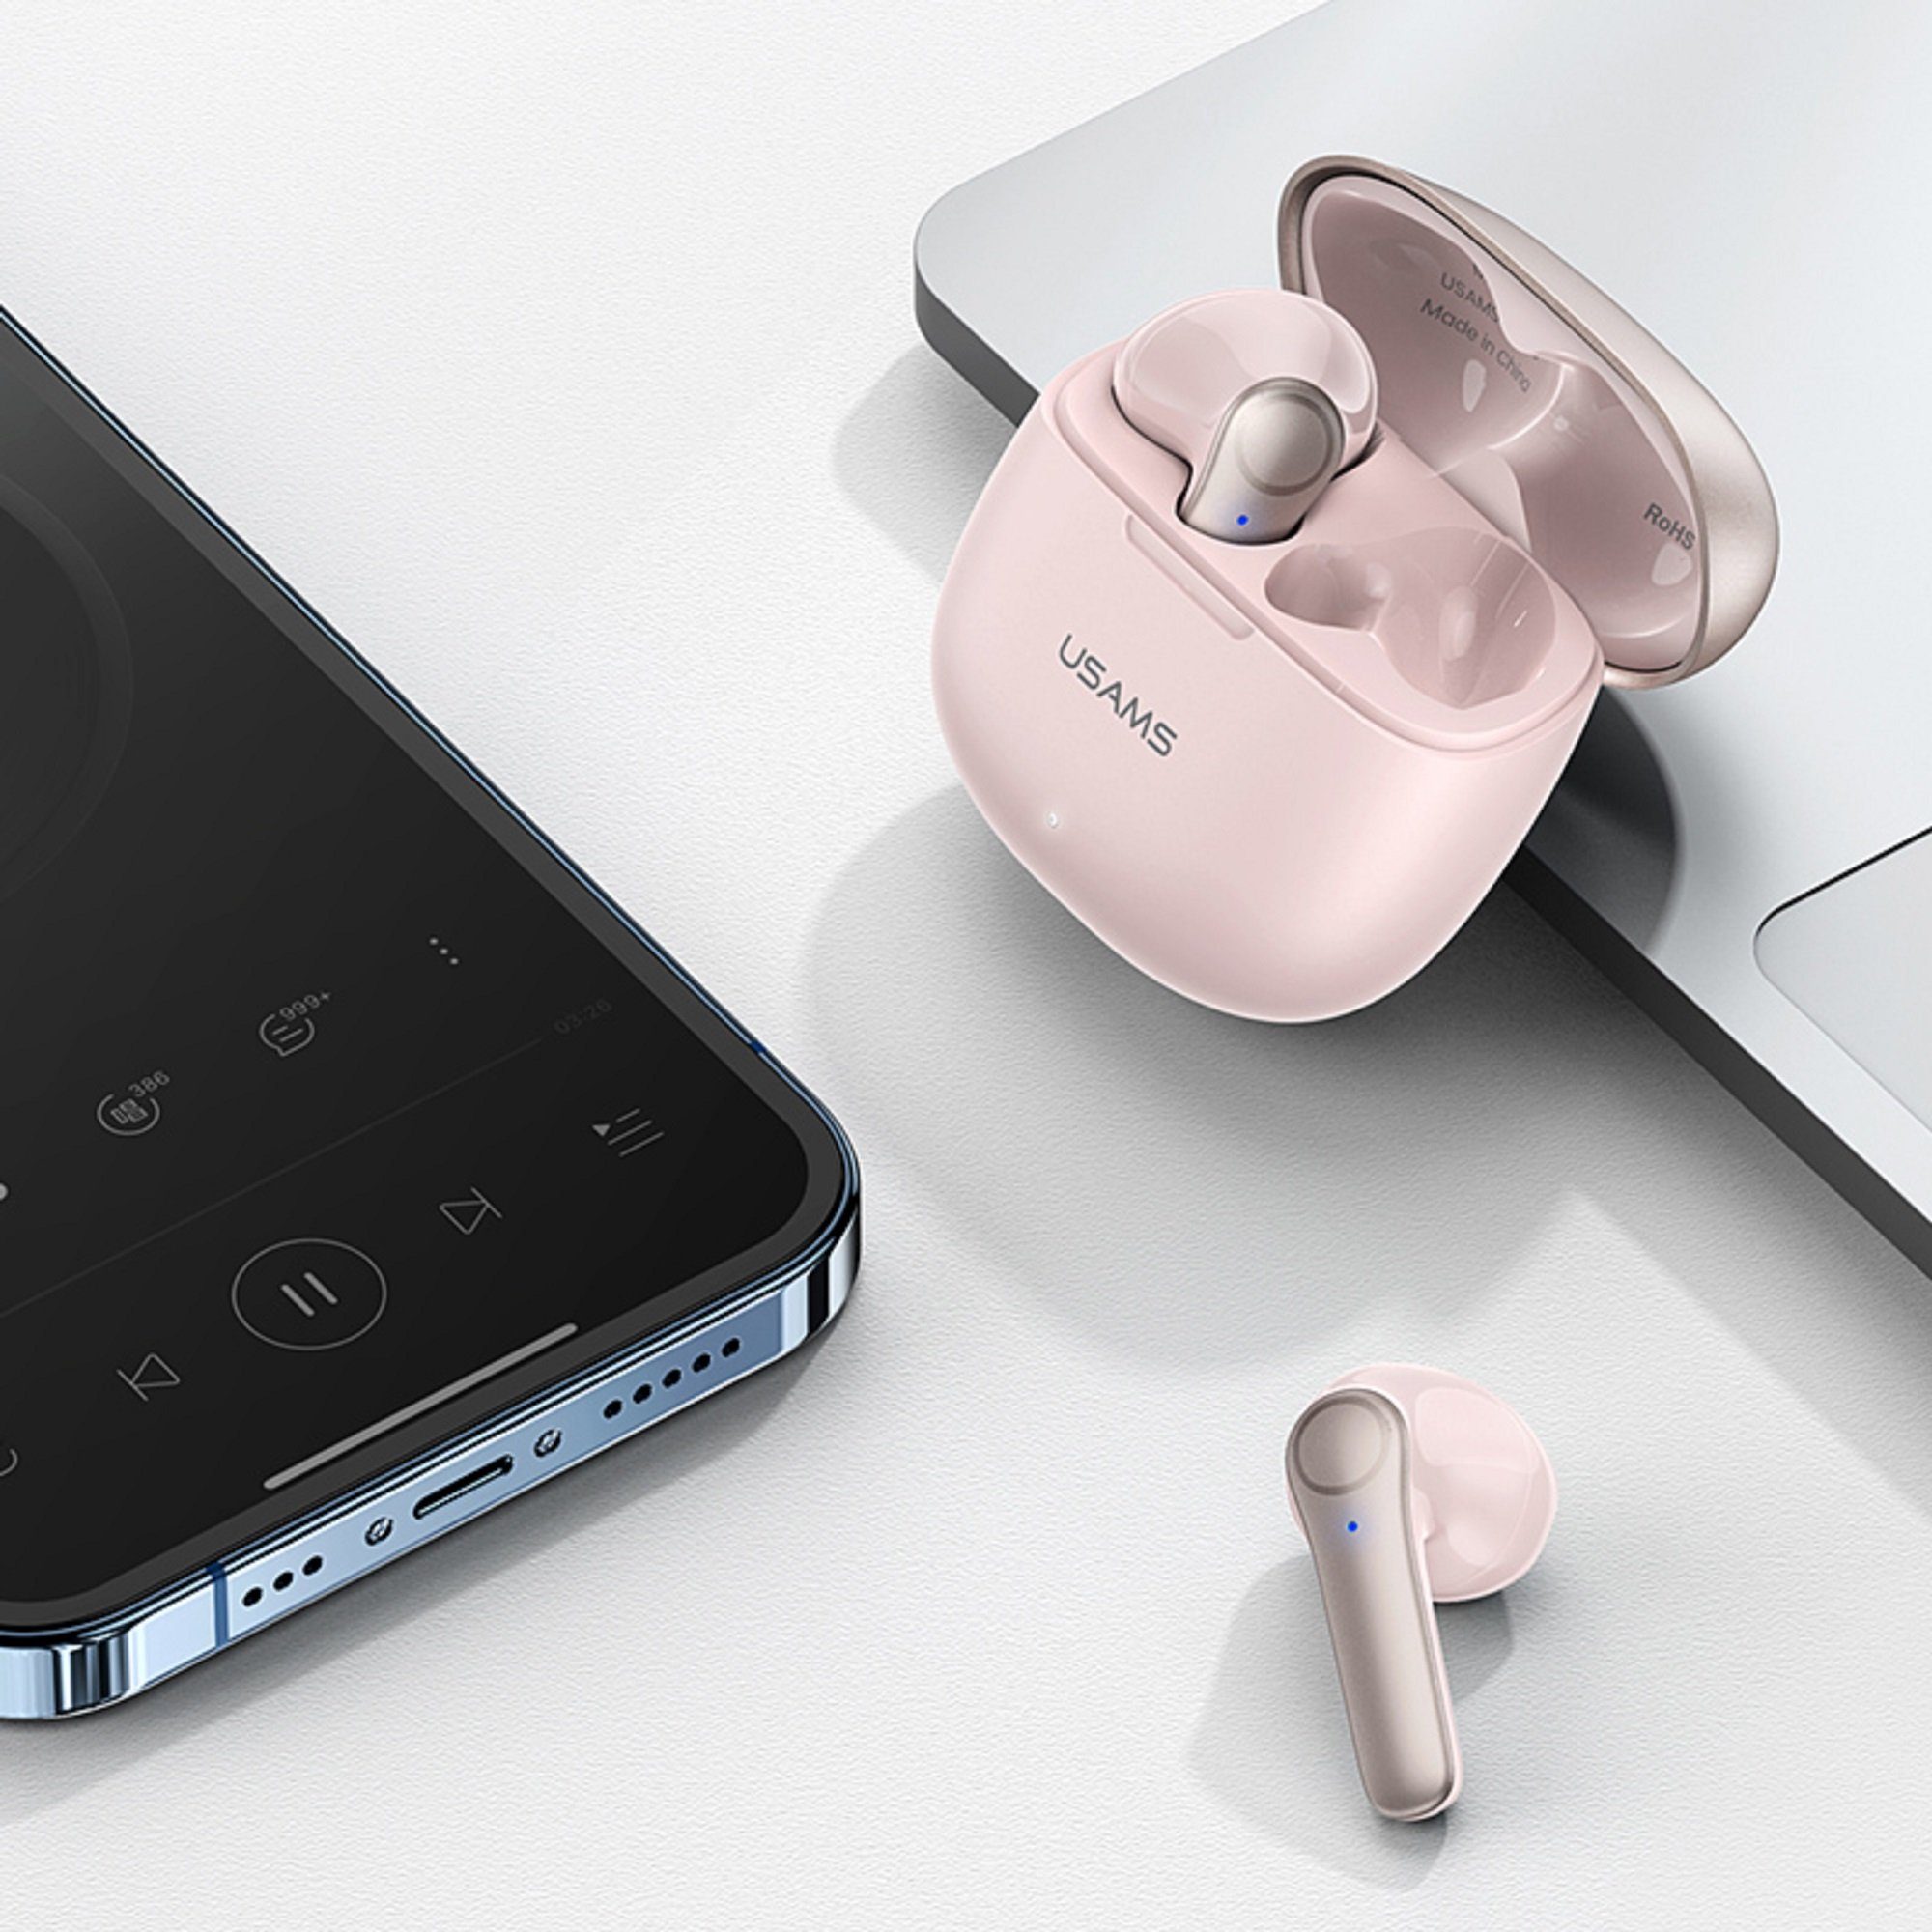 Bluetooth, Samsung USAMS Weiß BT TWS 5.1 Bluetooth (Bluetooth, Bluetooth-Kopfhörer Huawei iPhone In-Ear Kopfhörer Ohrhörer Touch für Smartphone Control, LG) Kabellos Touch-Funktion,